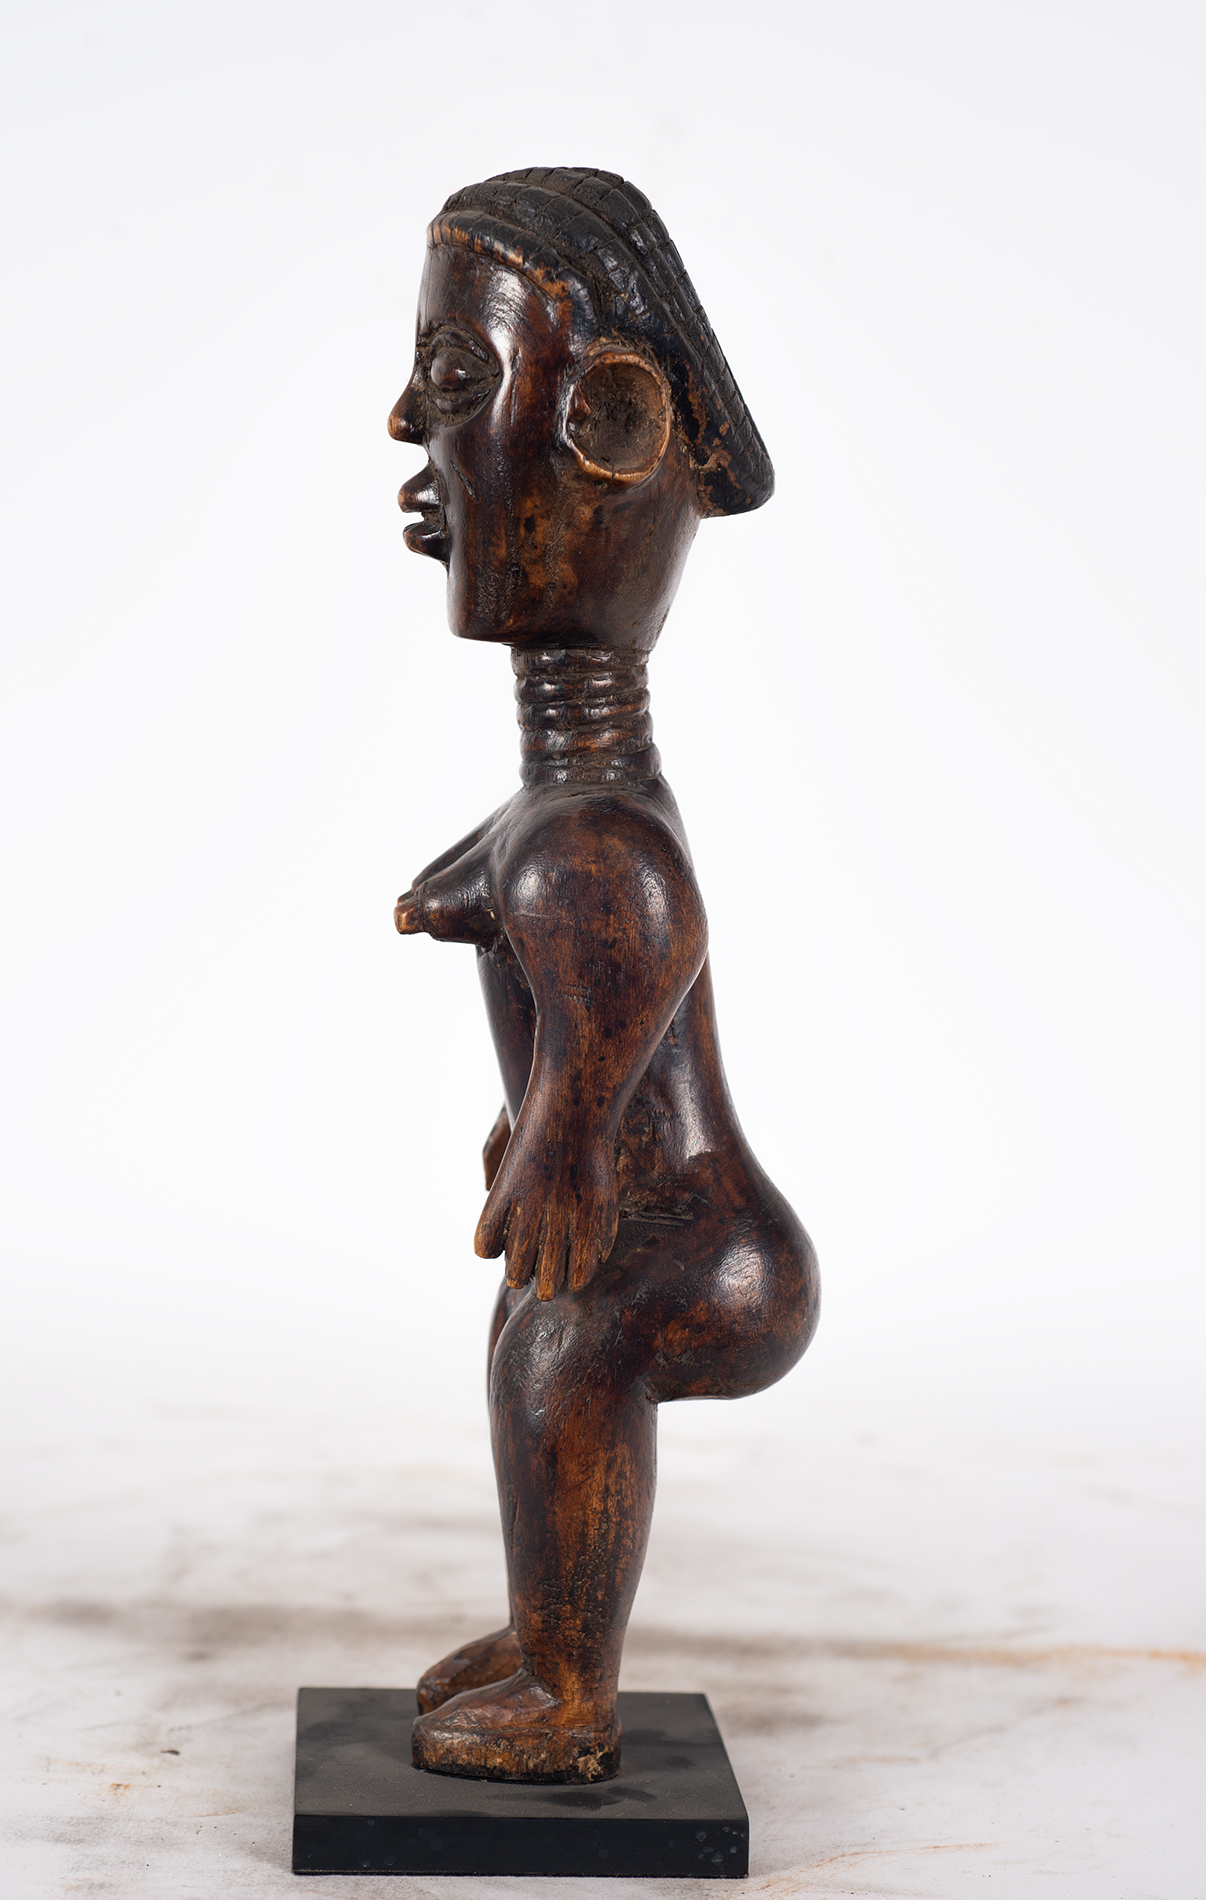 Guro Sculpture, Ivory Coast - Image 3 of 7